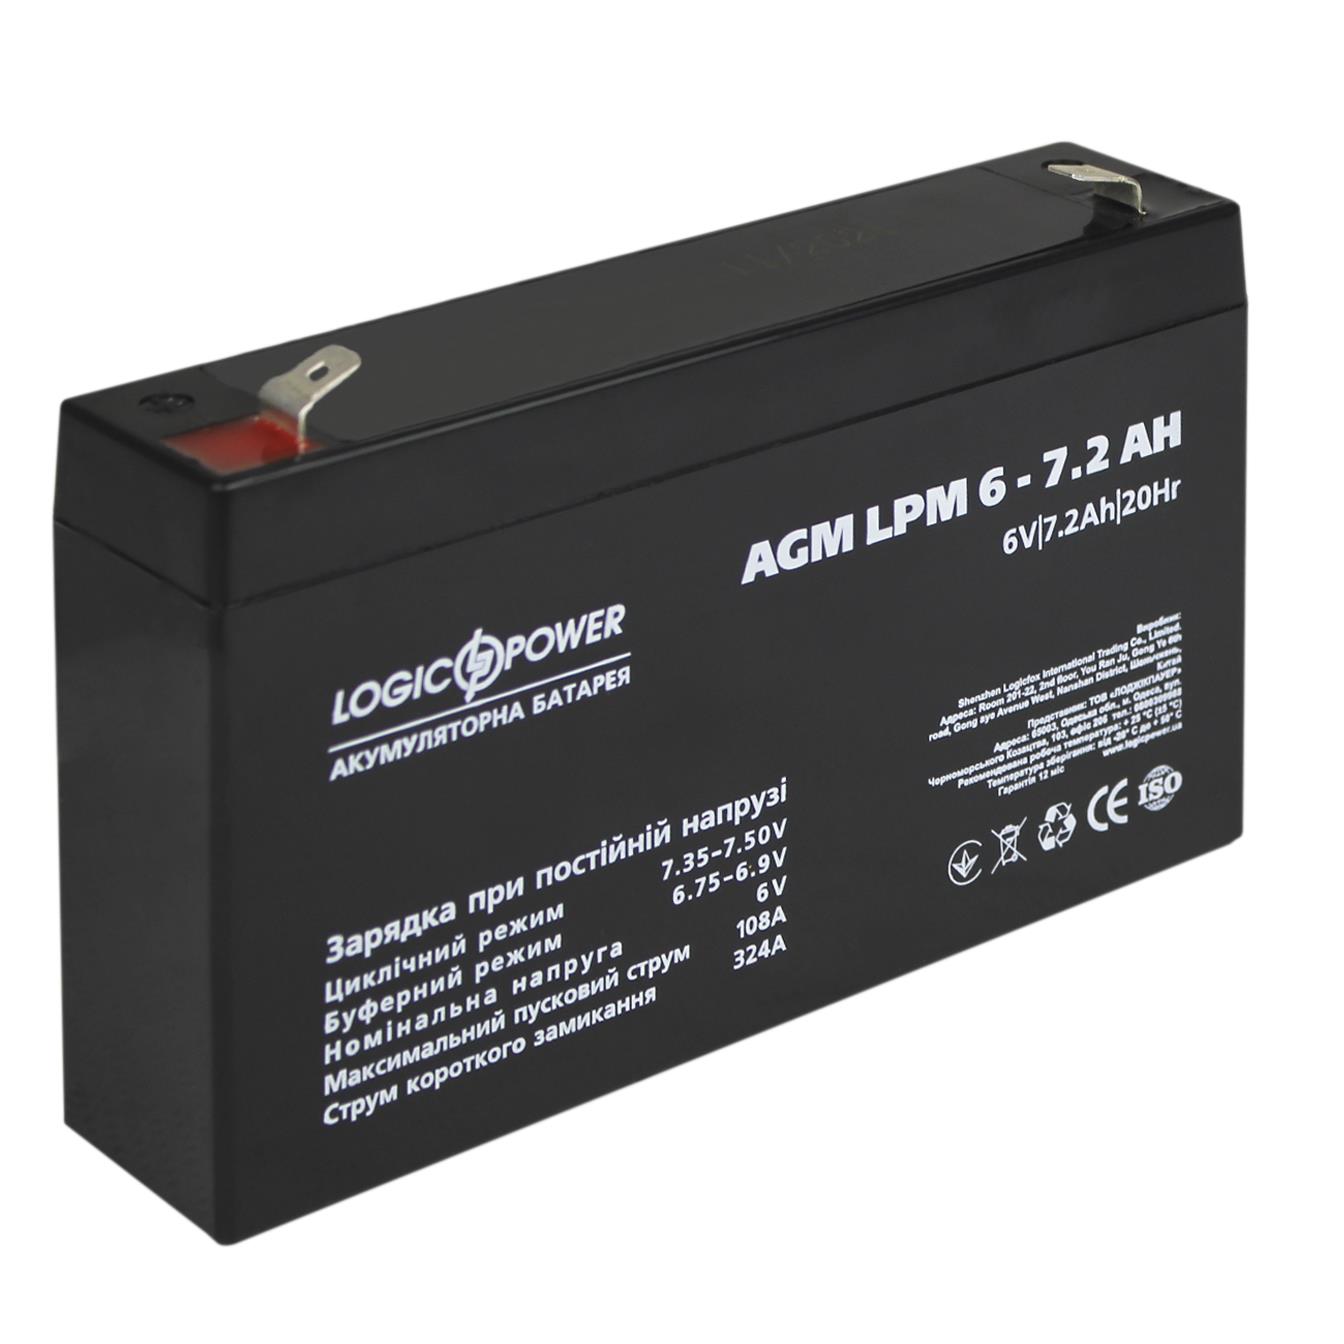 в продаже Аккумулятор свинцово-кислотный LogicPower AGM LPM 6V - 7.2 Ah (3859) - фото 3